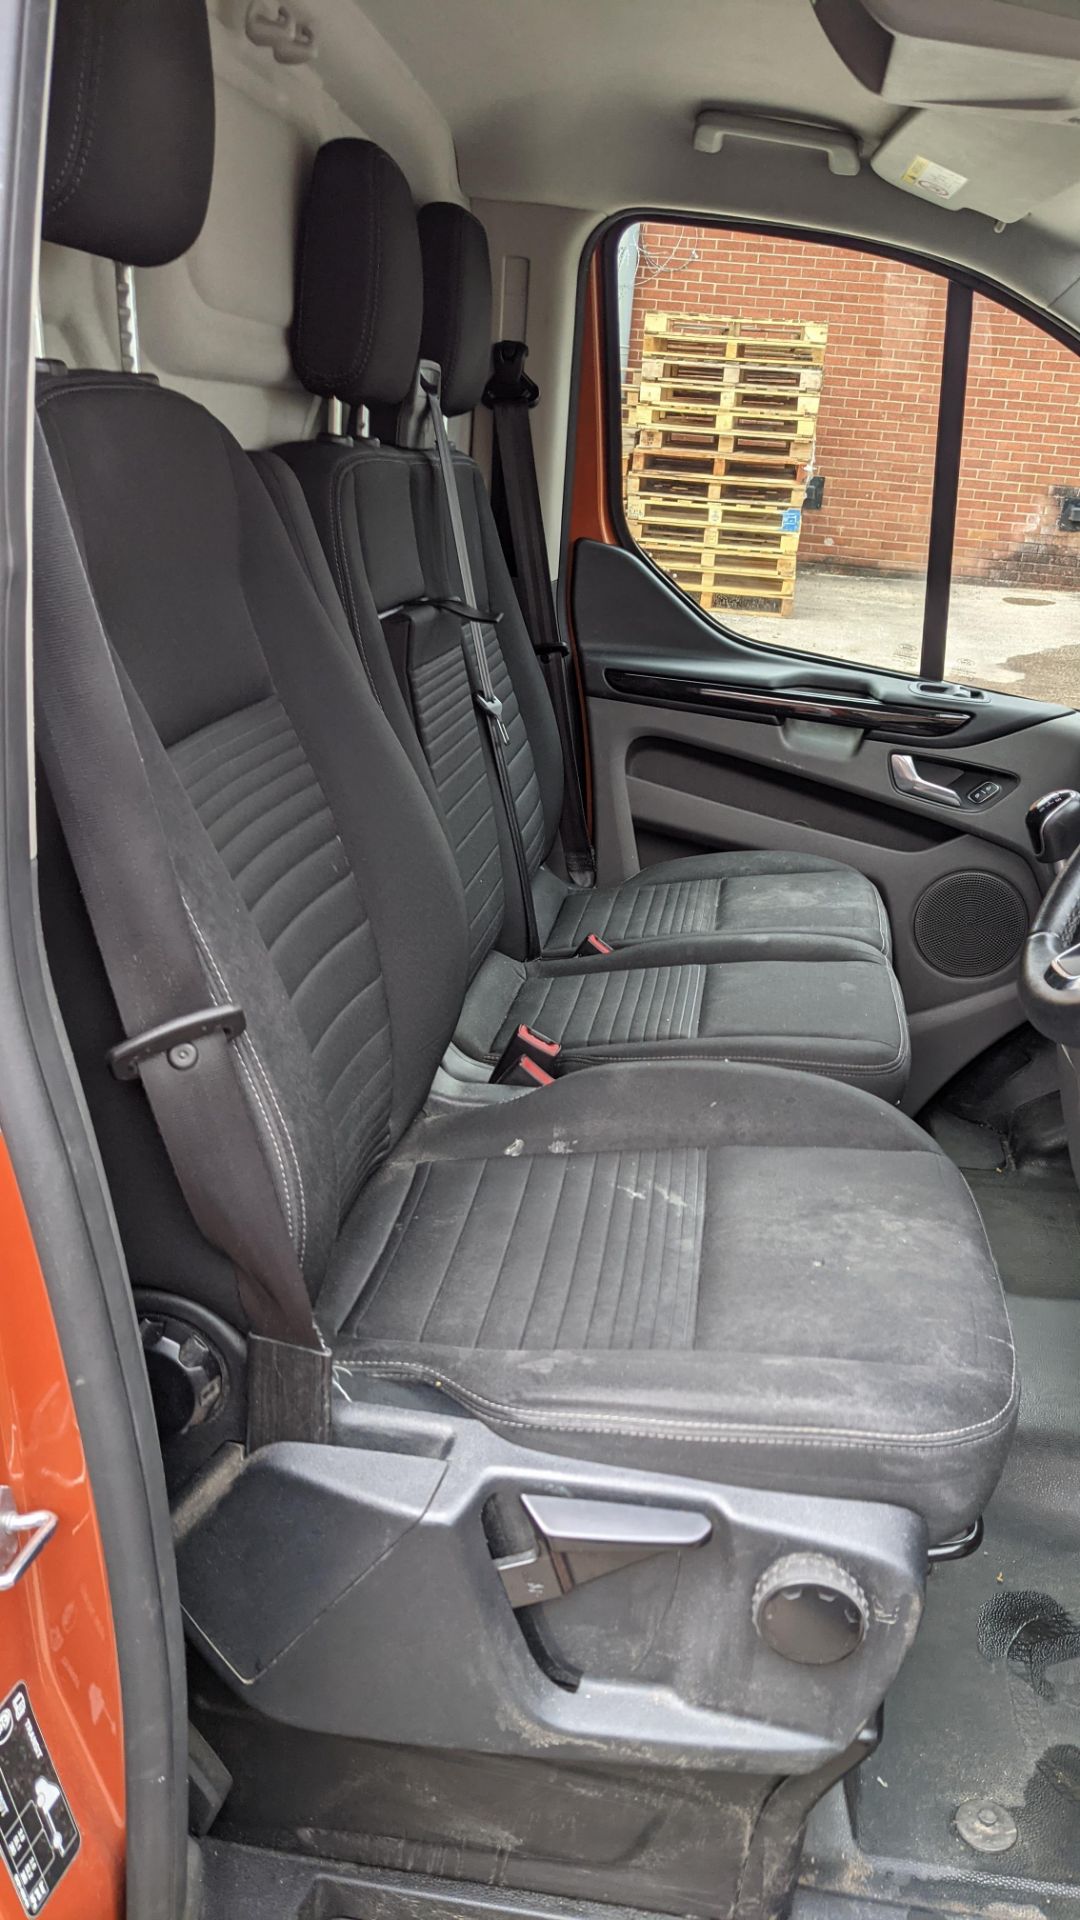 2019 Ford Transit Custom 300 L2 van, Orange Glow. High spec: Heated seats, air con, parking sensors - Image 61 of 66